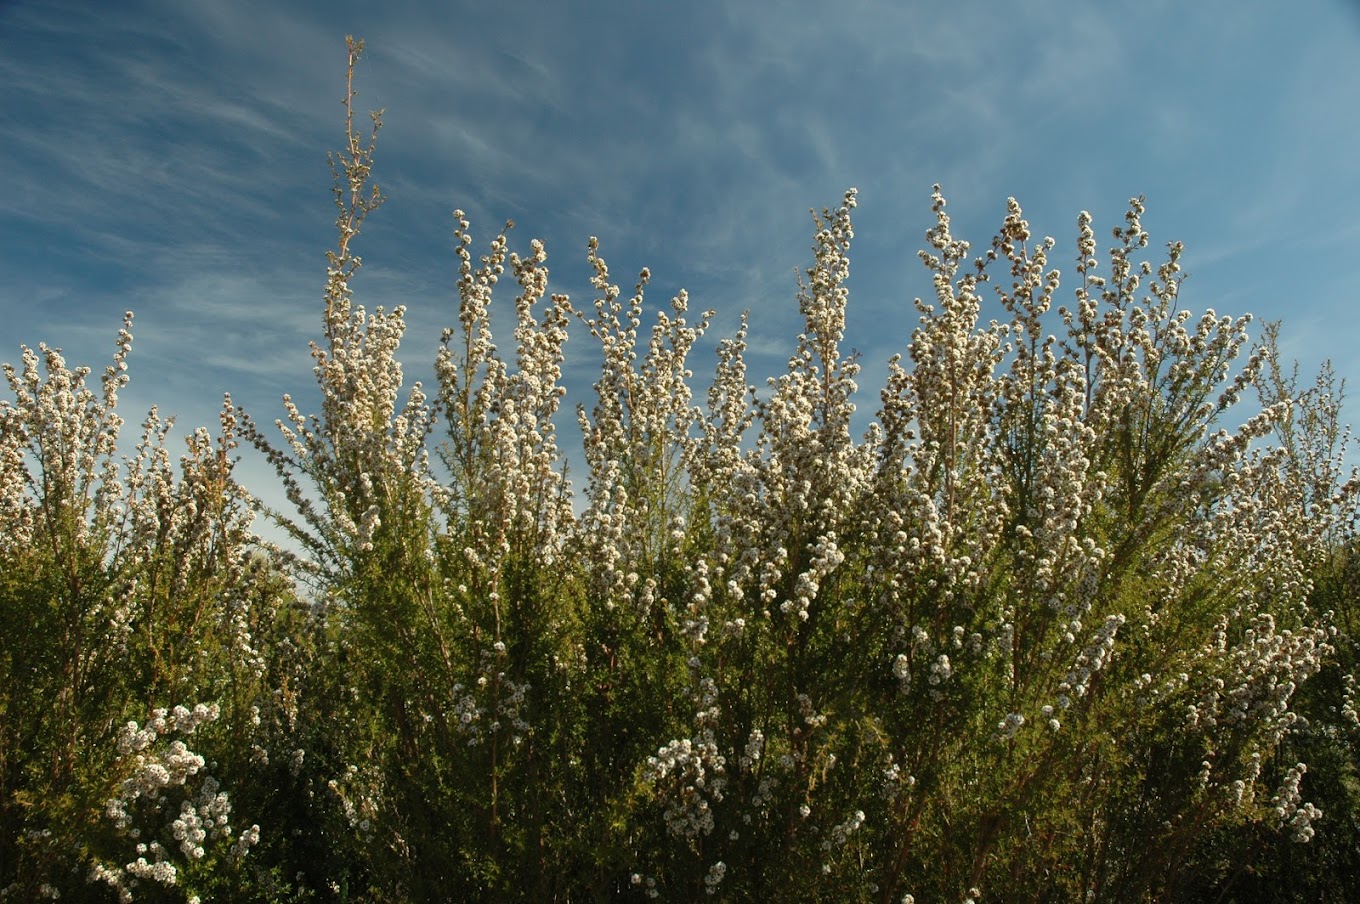 Fragonia plant